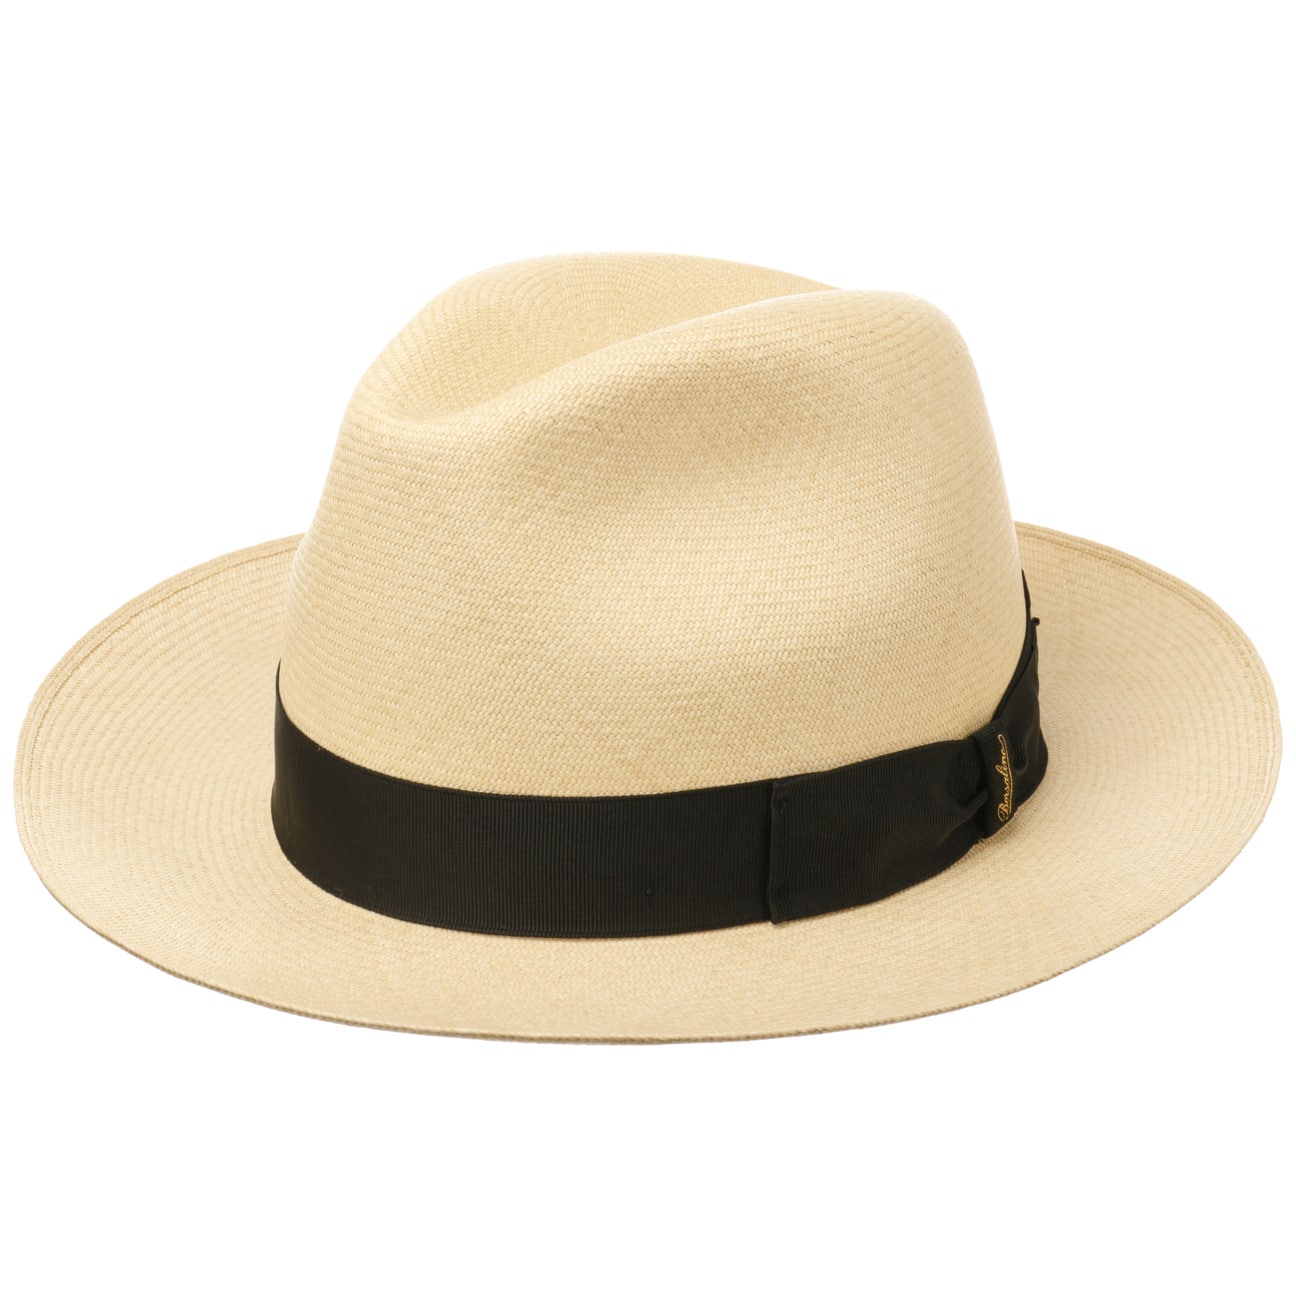 Borsalino Panama Bogart Hat Premium, EUR 799,00 --> Hats, caps ...